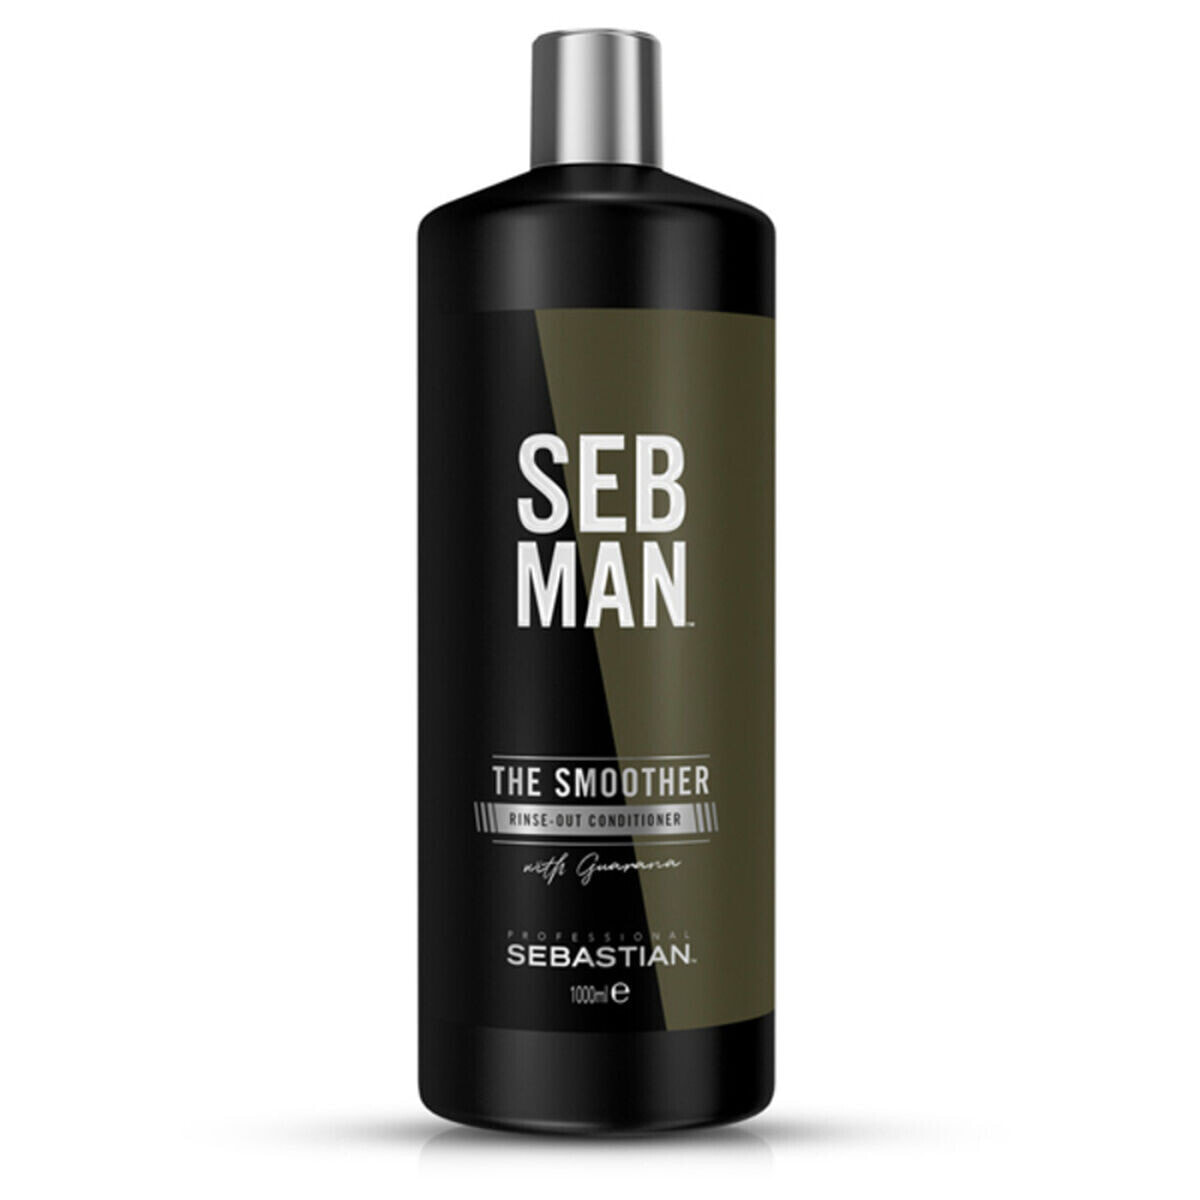 Увлажняющий кондиционер Sebman The Smoother Seb Man (1000 ml)